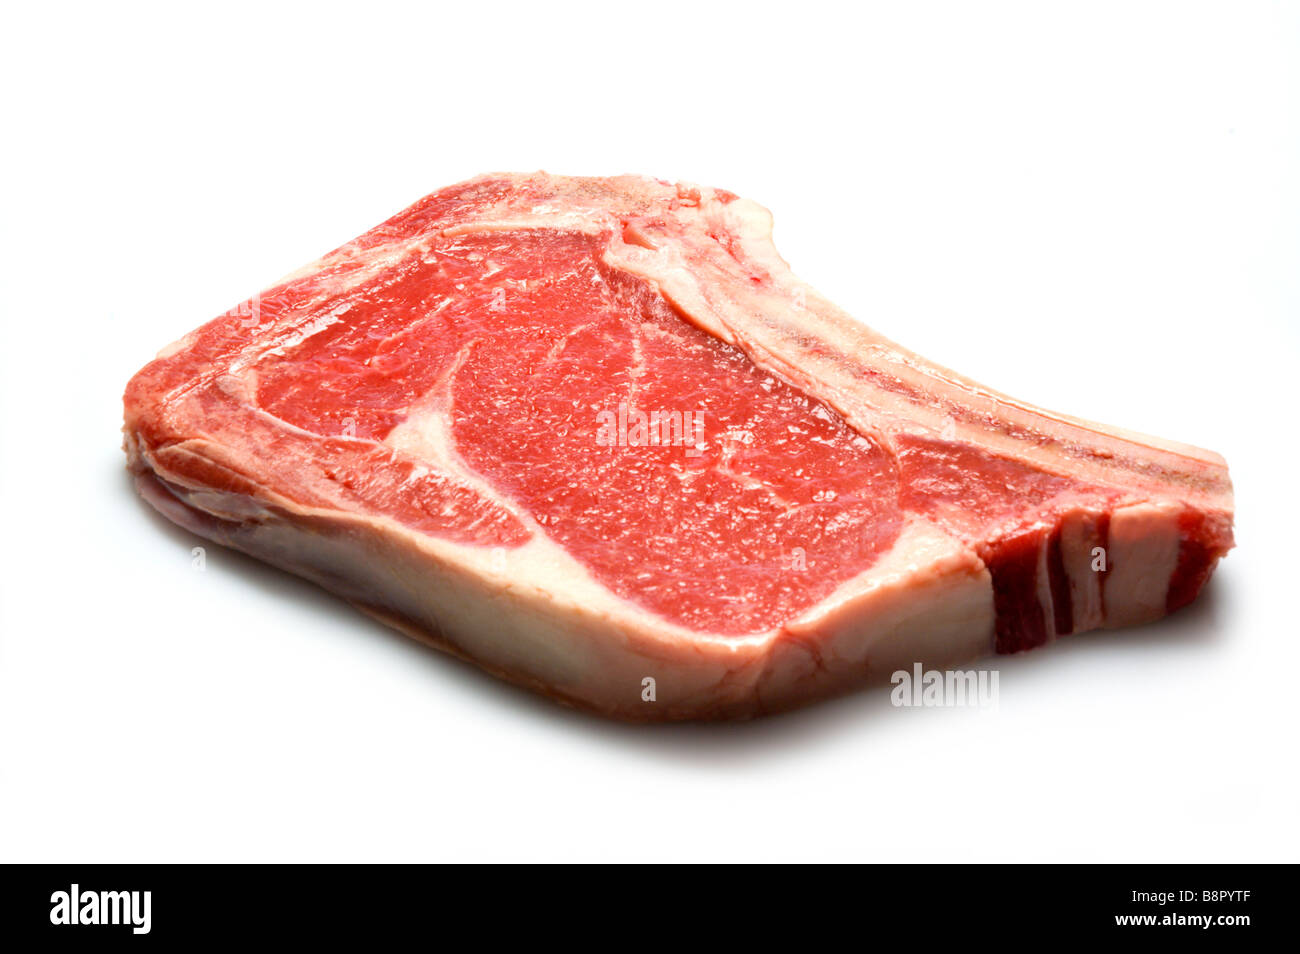 Beef rib grilling steak Stock Photo